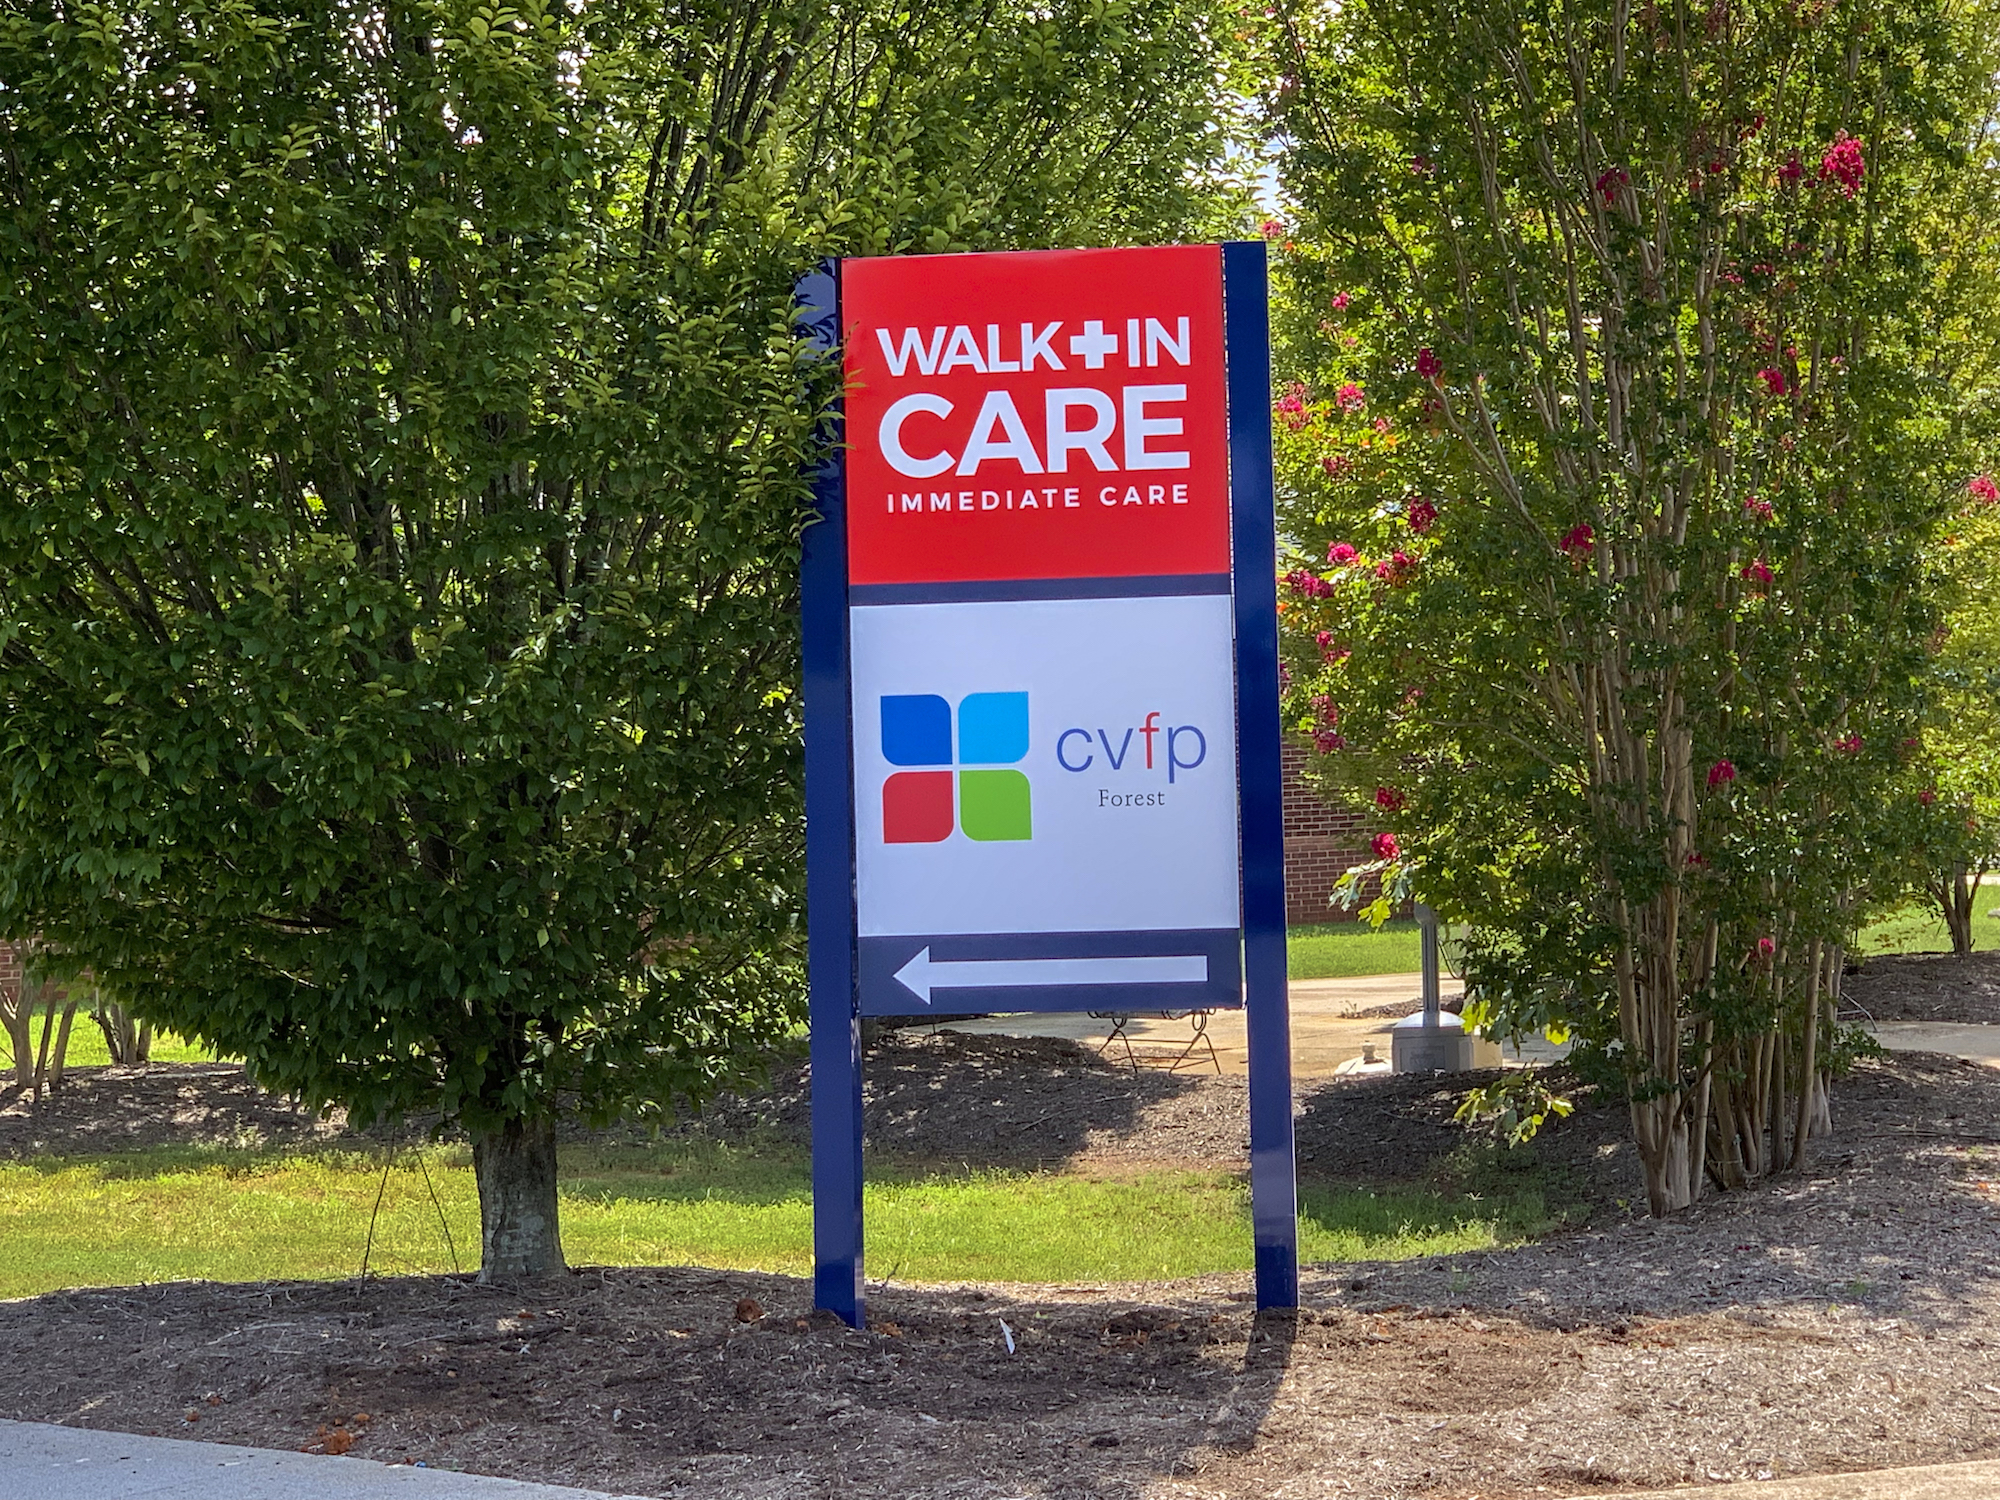 Walk-in-care CVFP Wayfinder sign